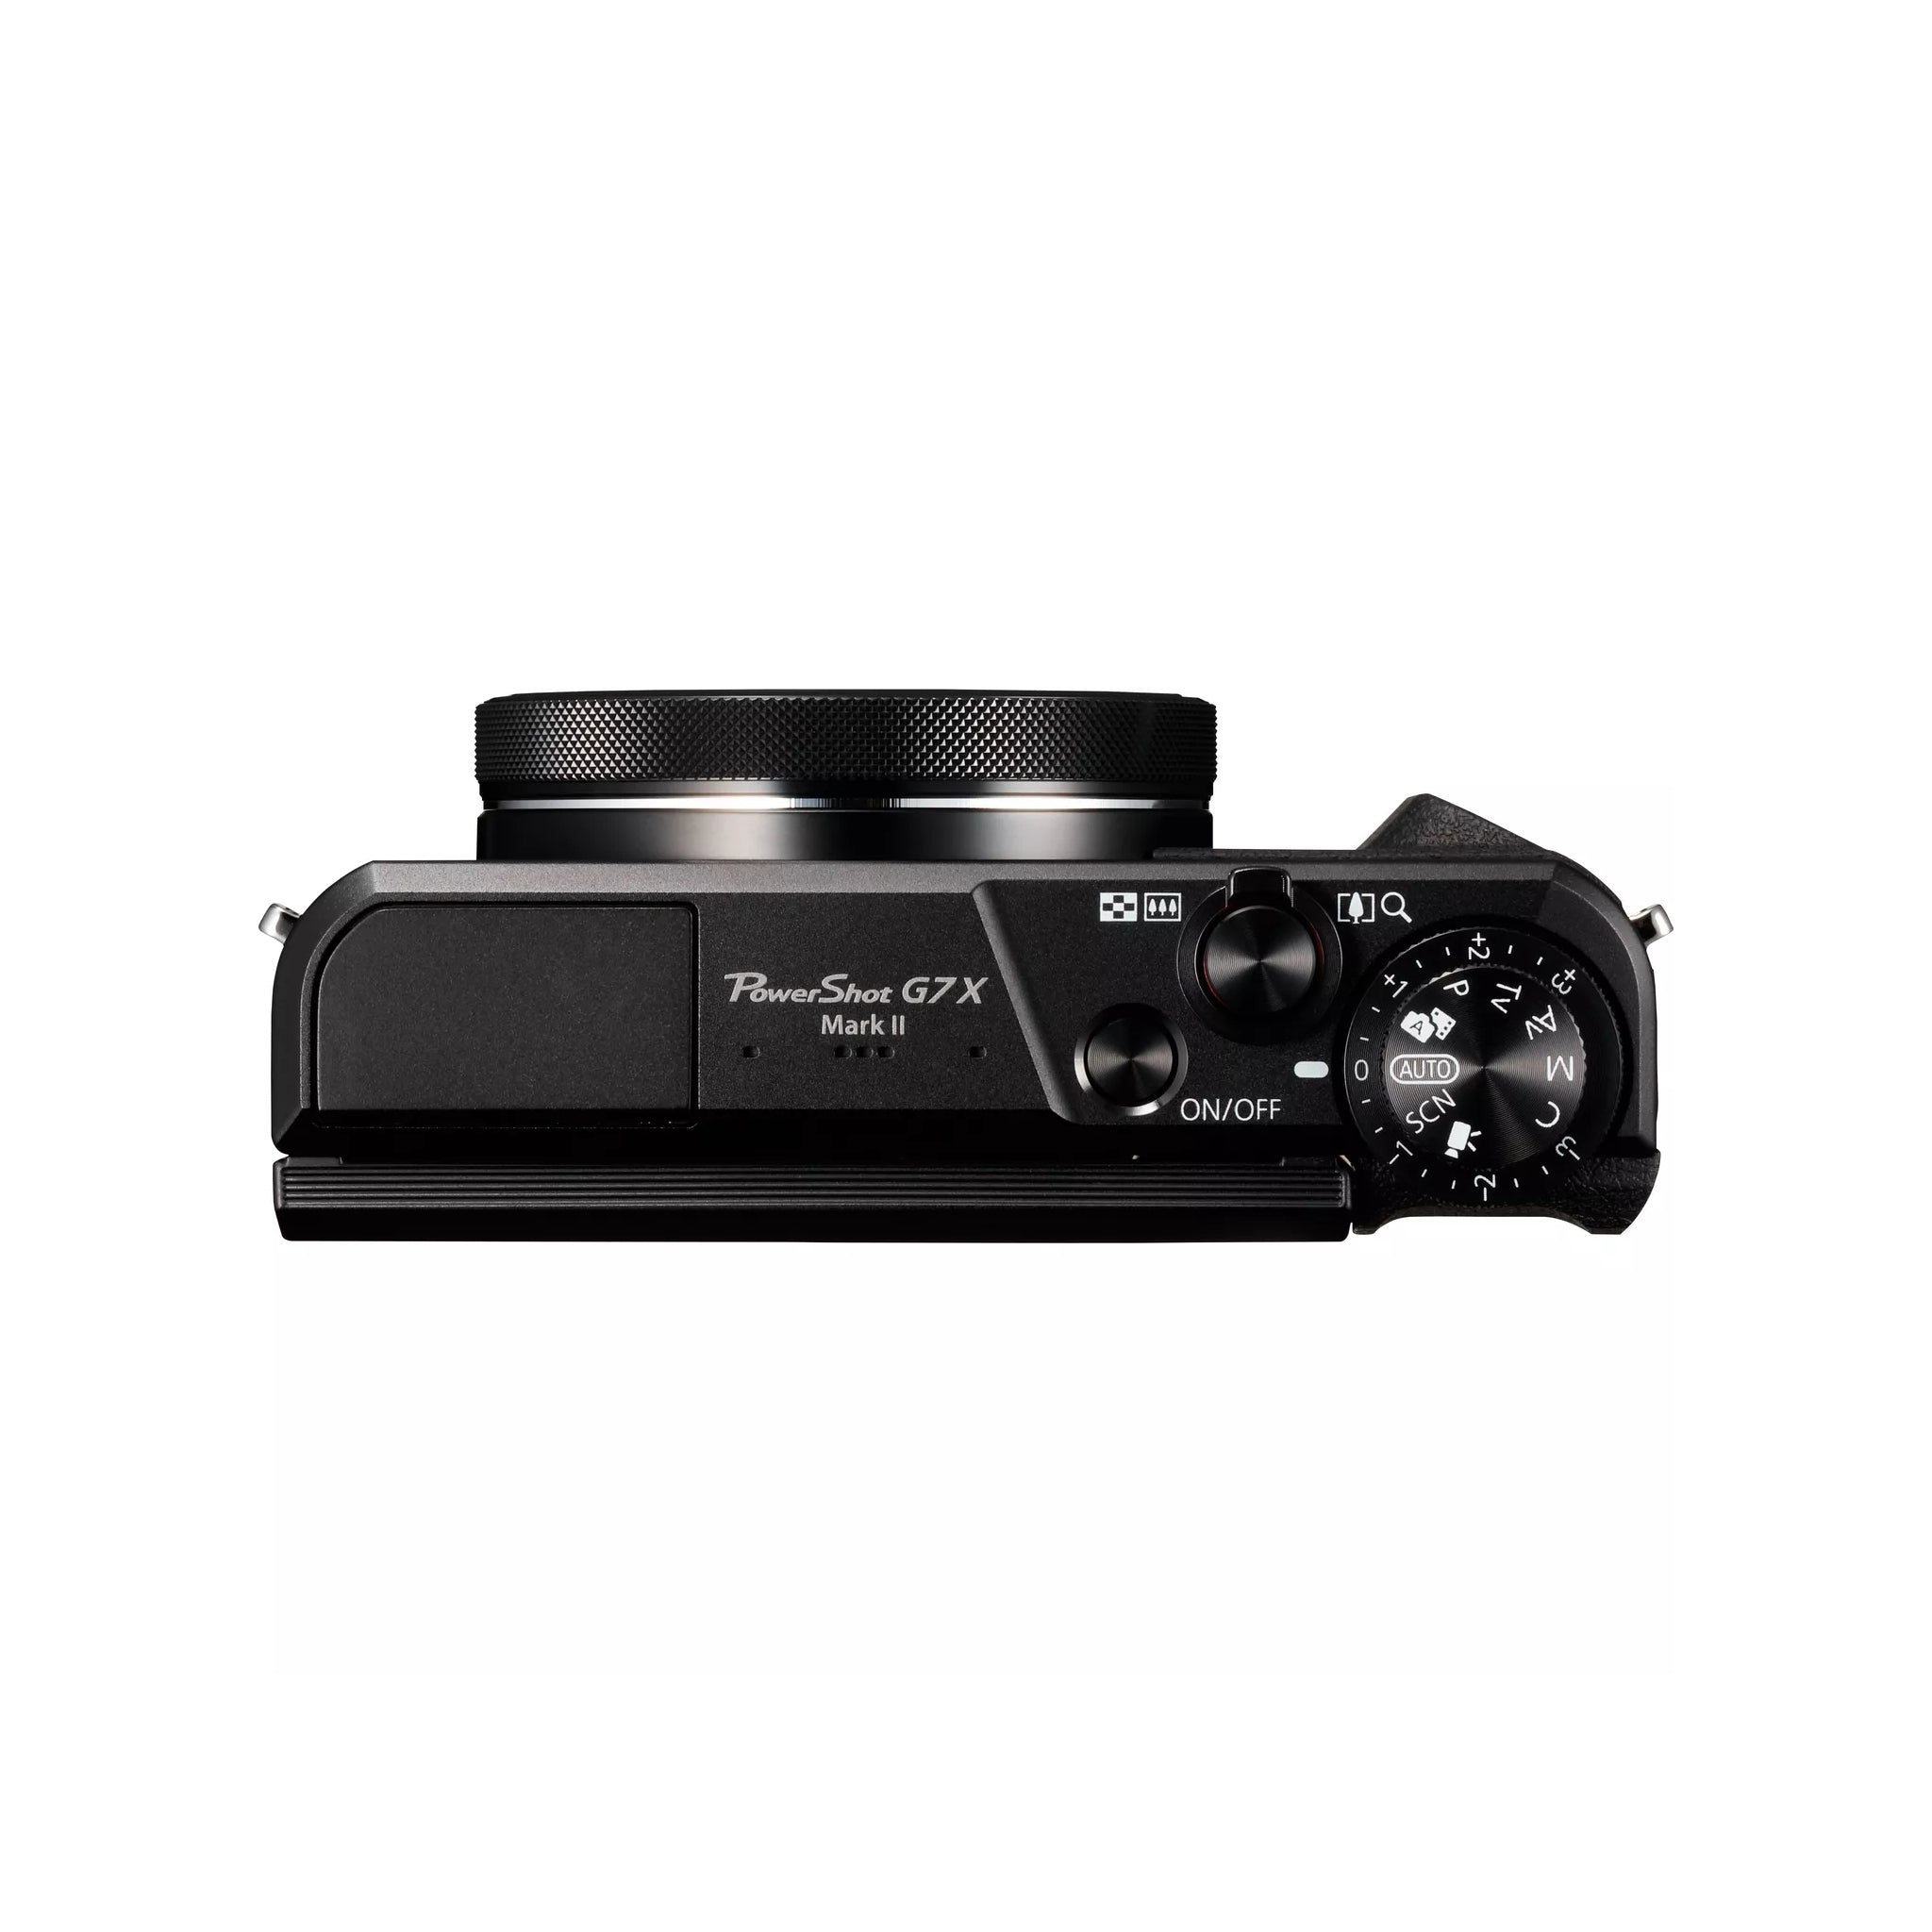 Canon Powershot G7X mk ii compact camera Black